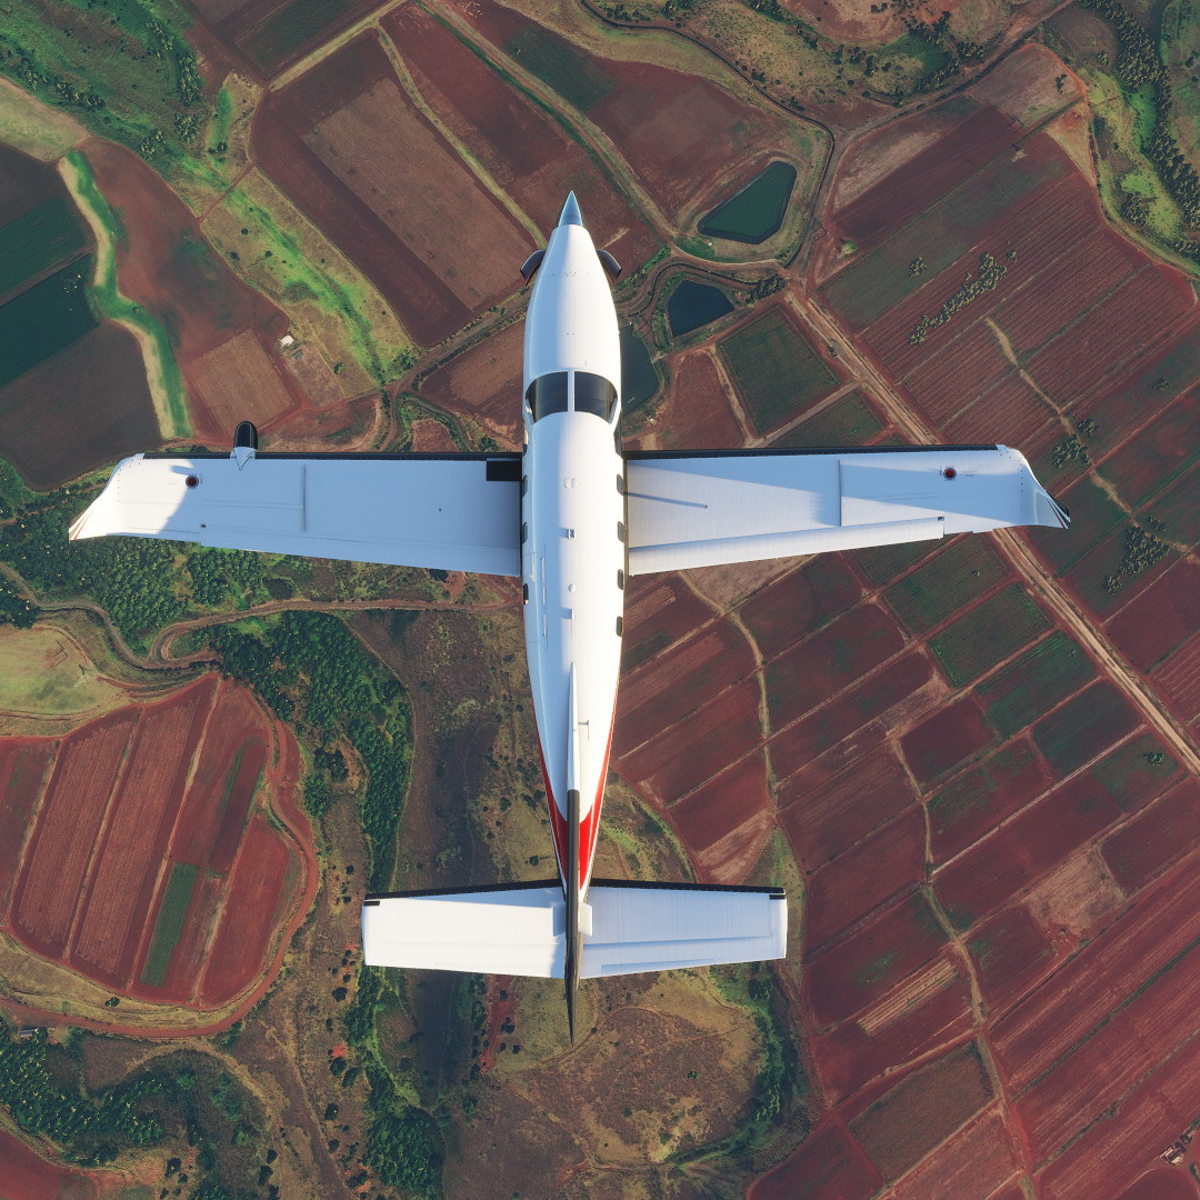 Best flight sim: Microsoft Flight Simulator vs. X-Plane (part 2)